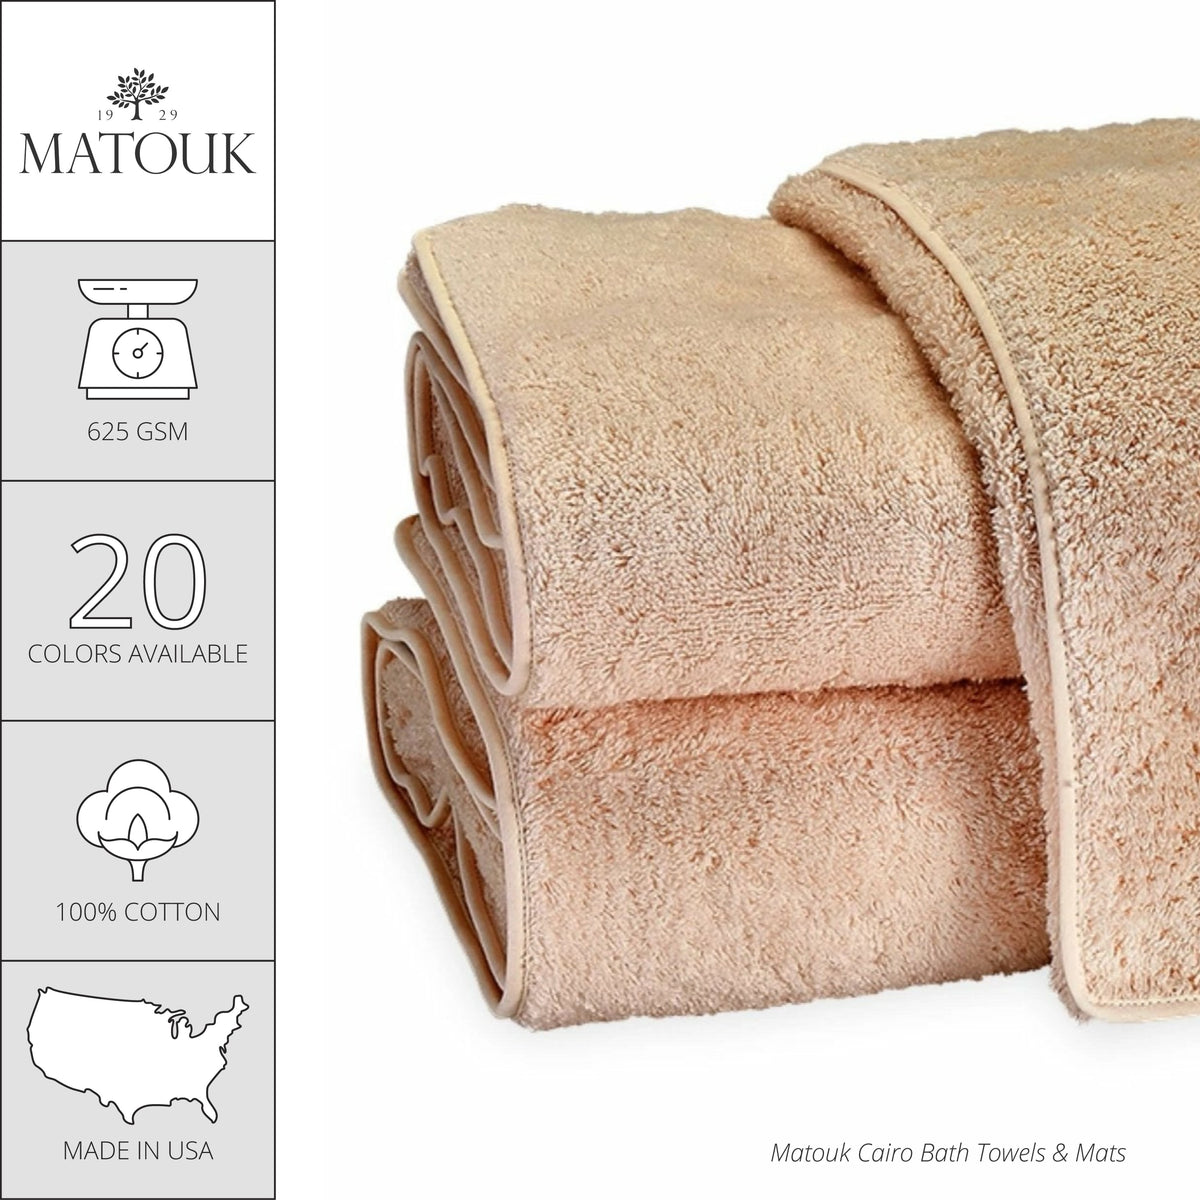 Matouk Cairo Scallop Bath Towels and Mats - Navy